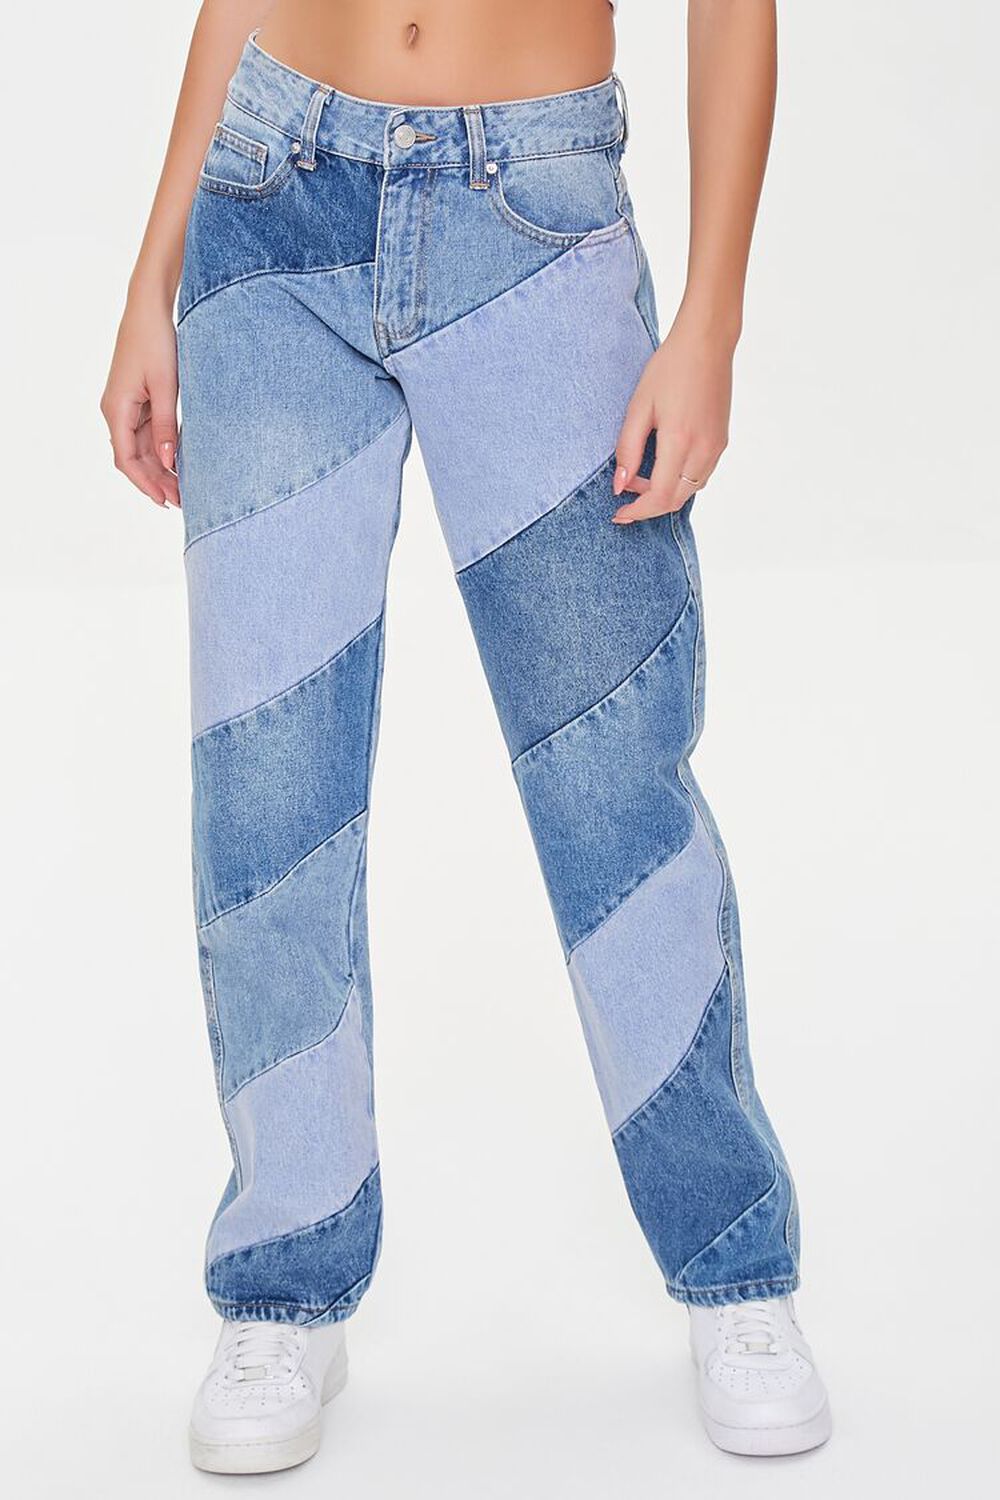 MEDIUM DENIM/MULTI Reworked Diagonal Striped Jeans, image 2